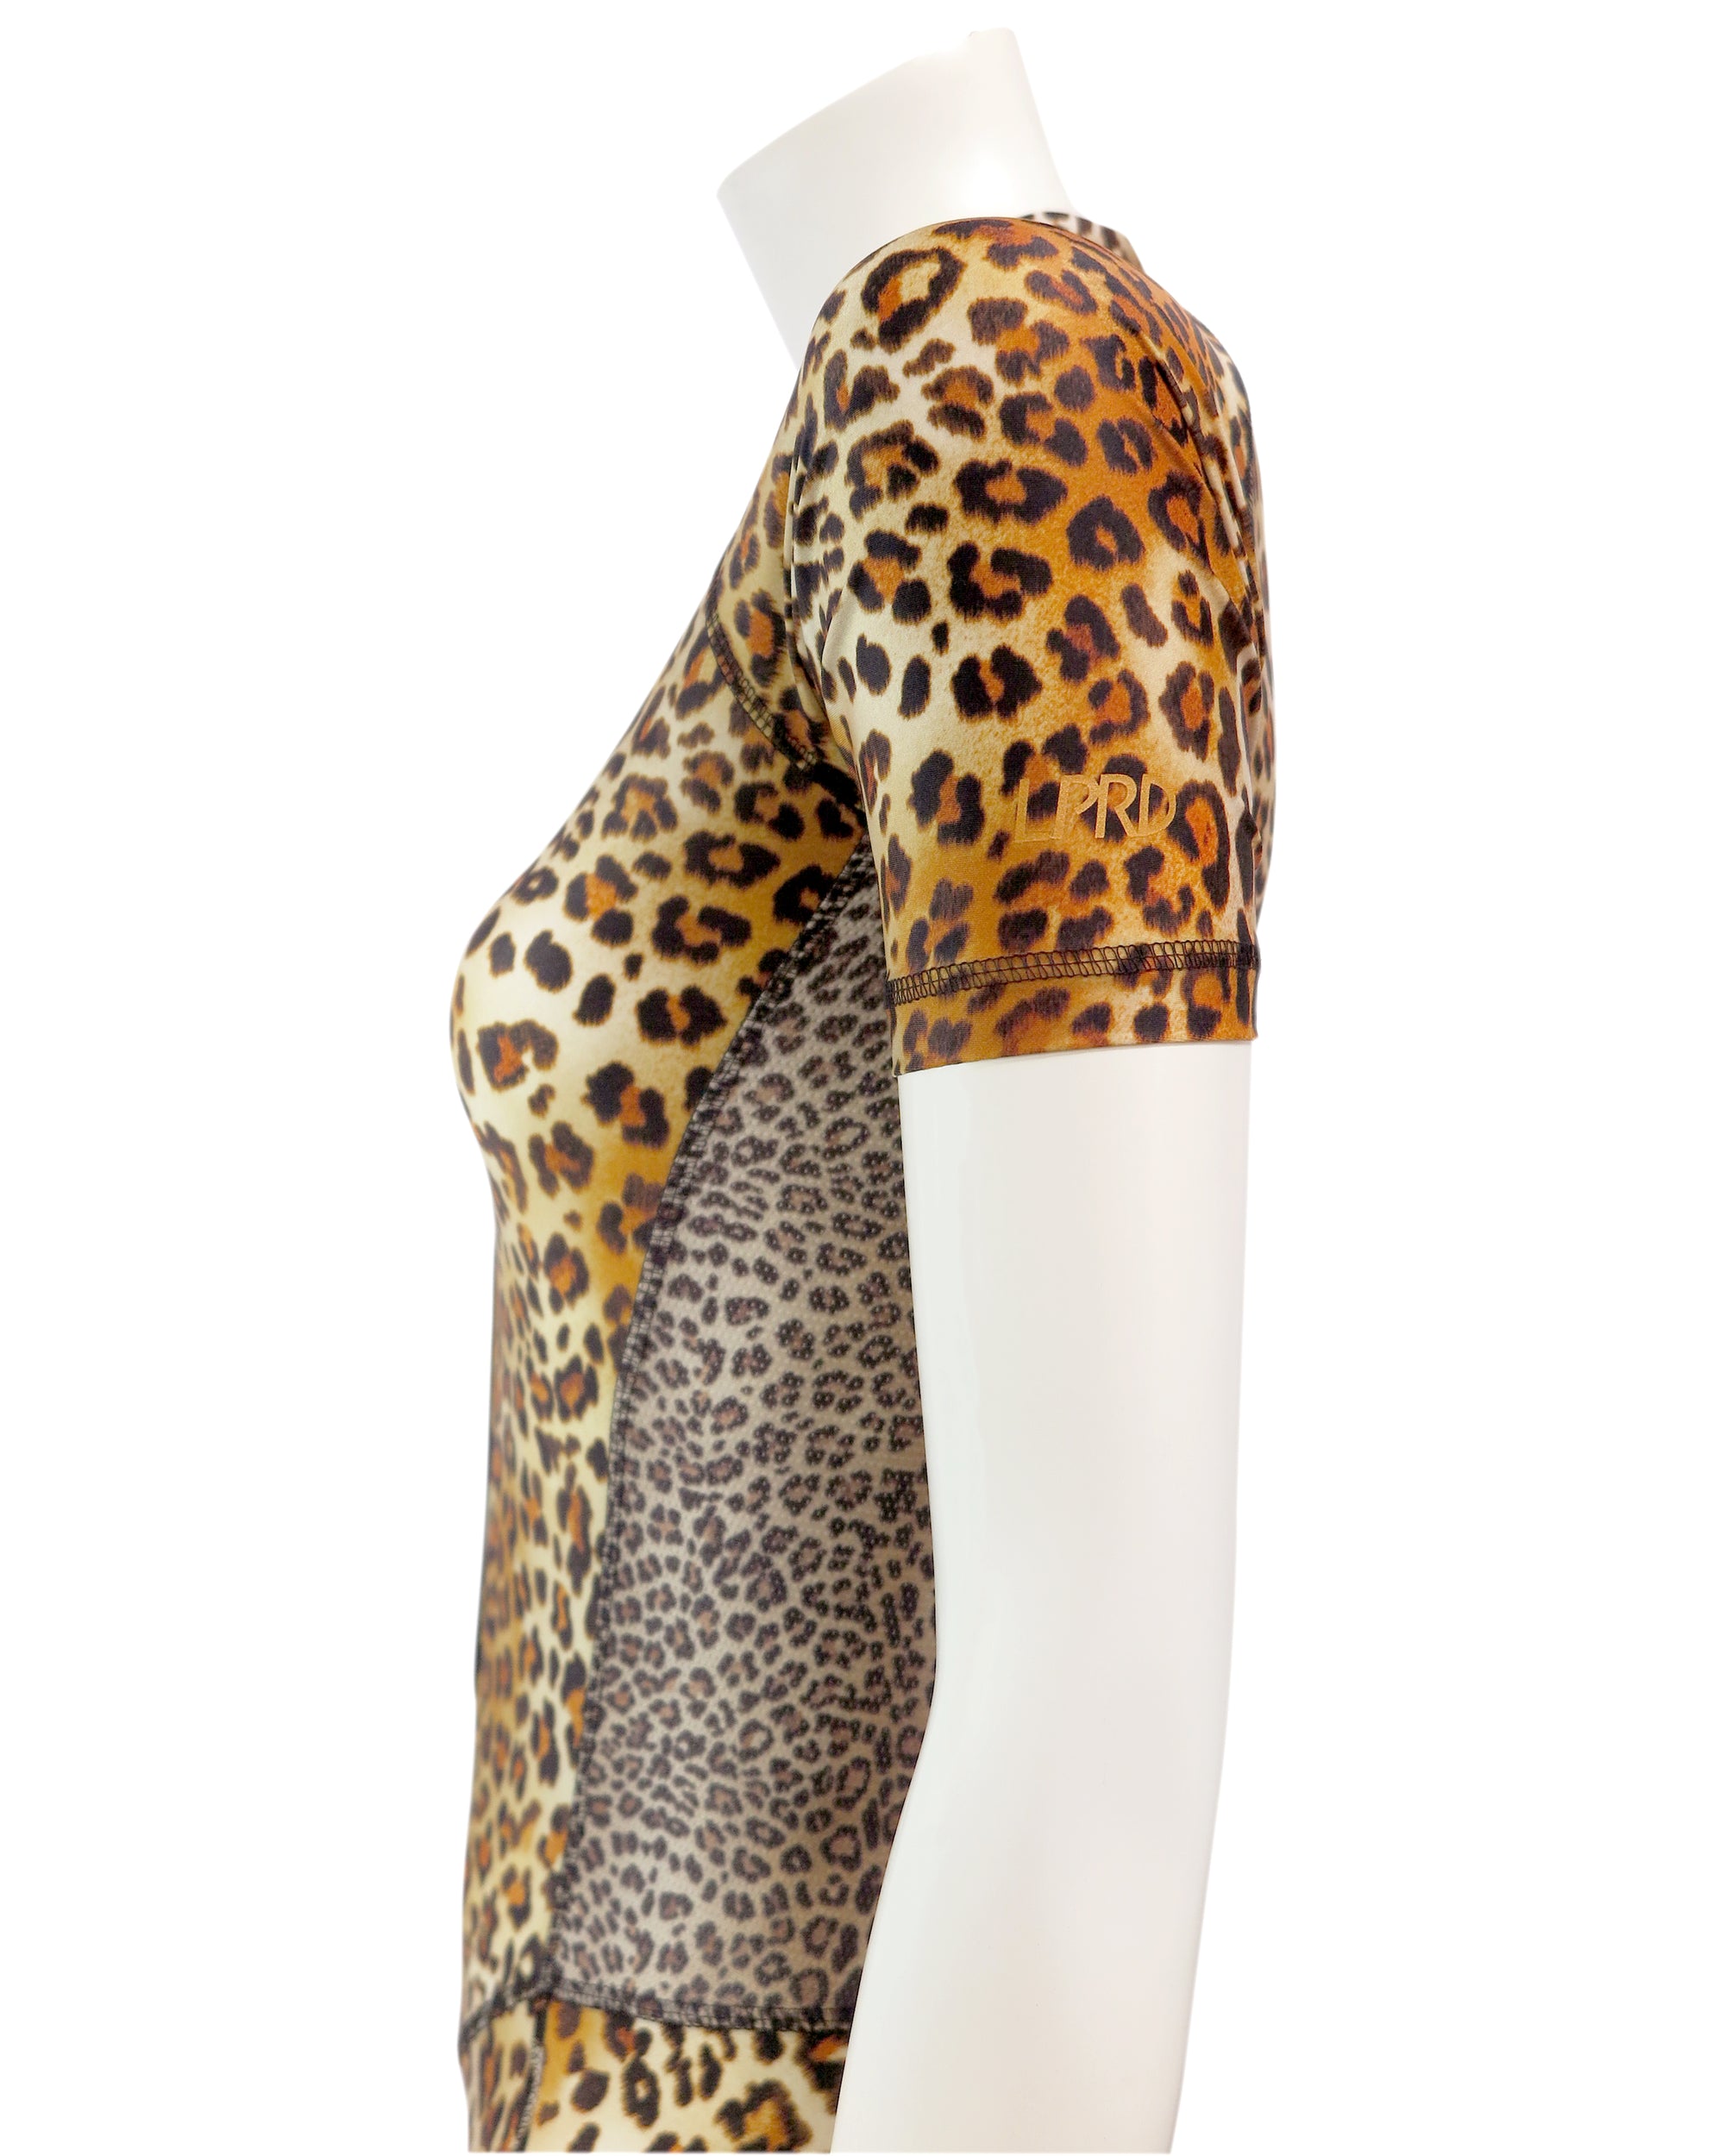 Skinsuit Leopard Print mesh panel side view